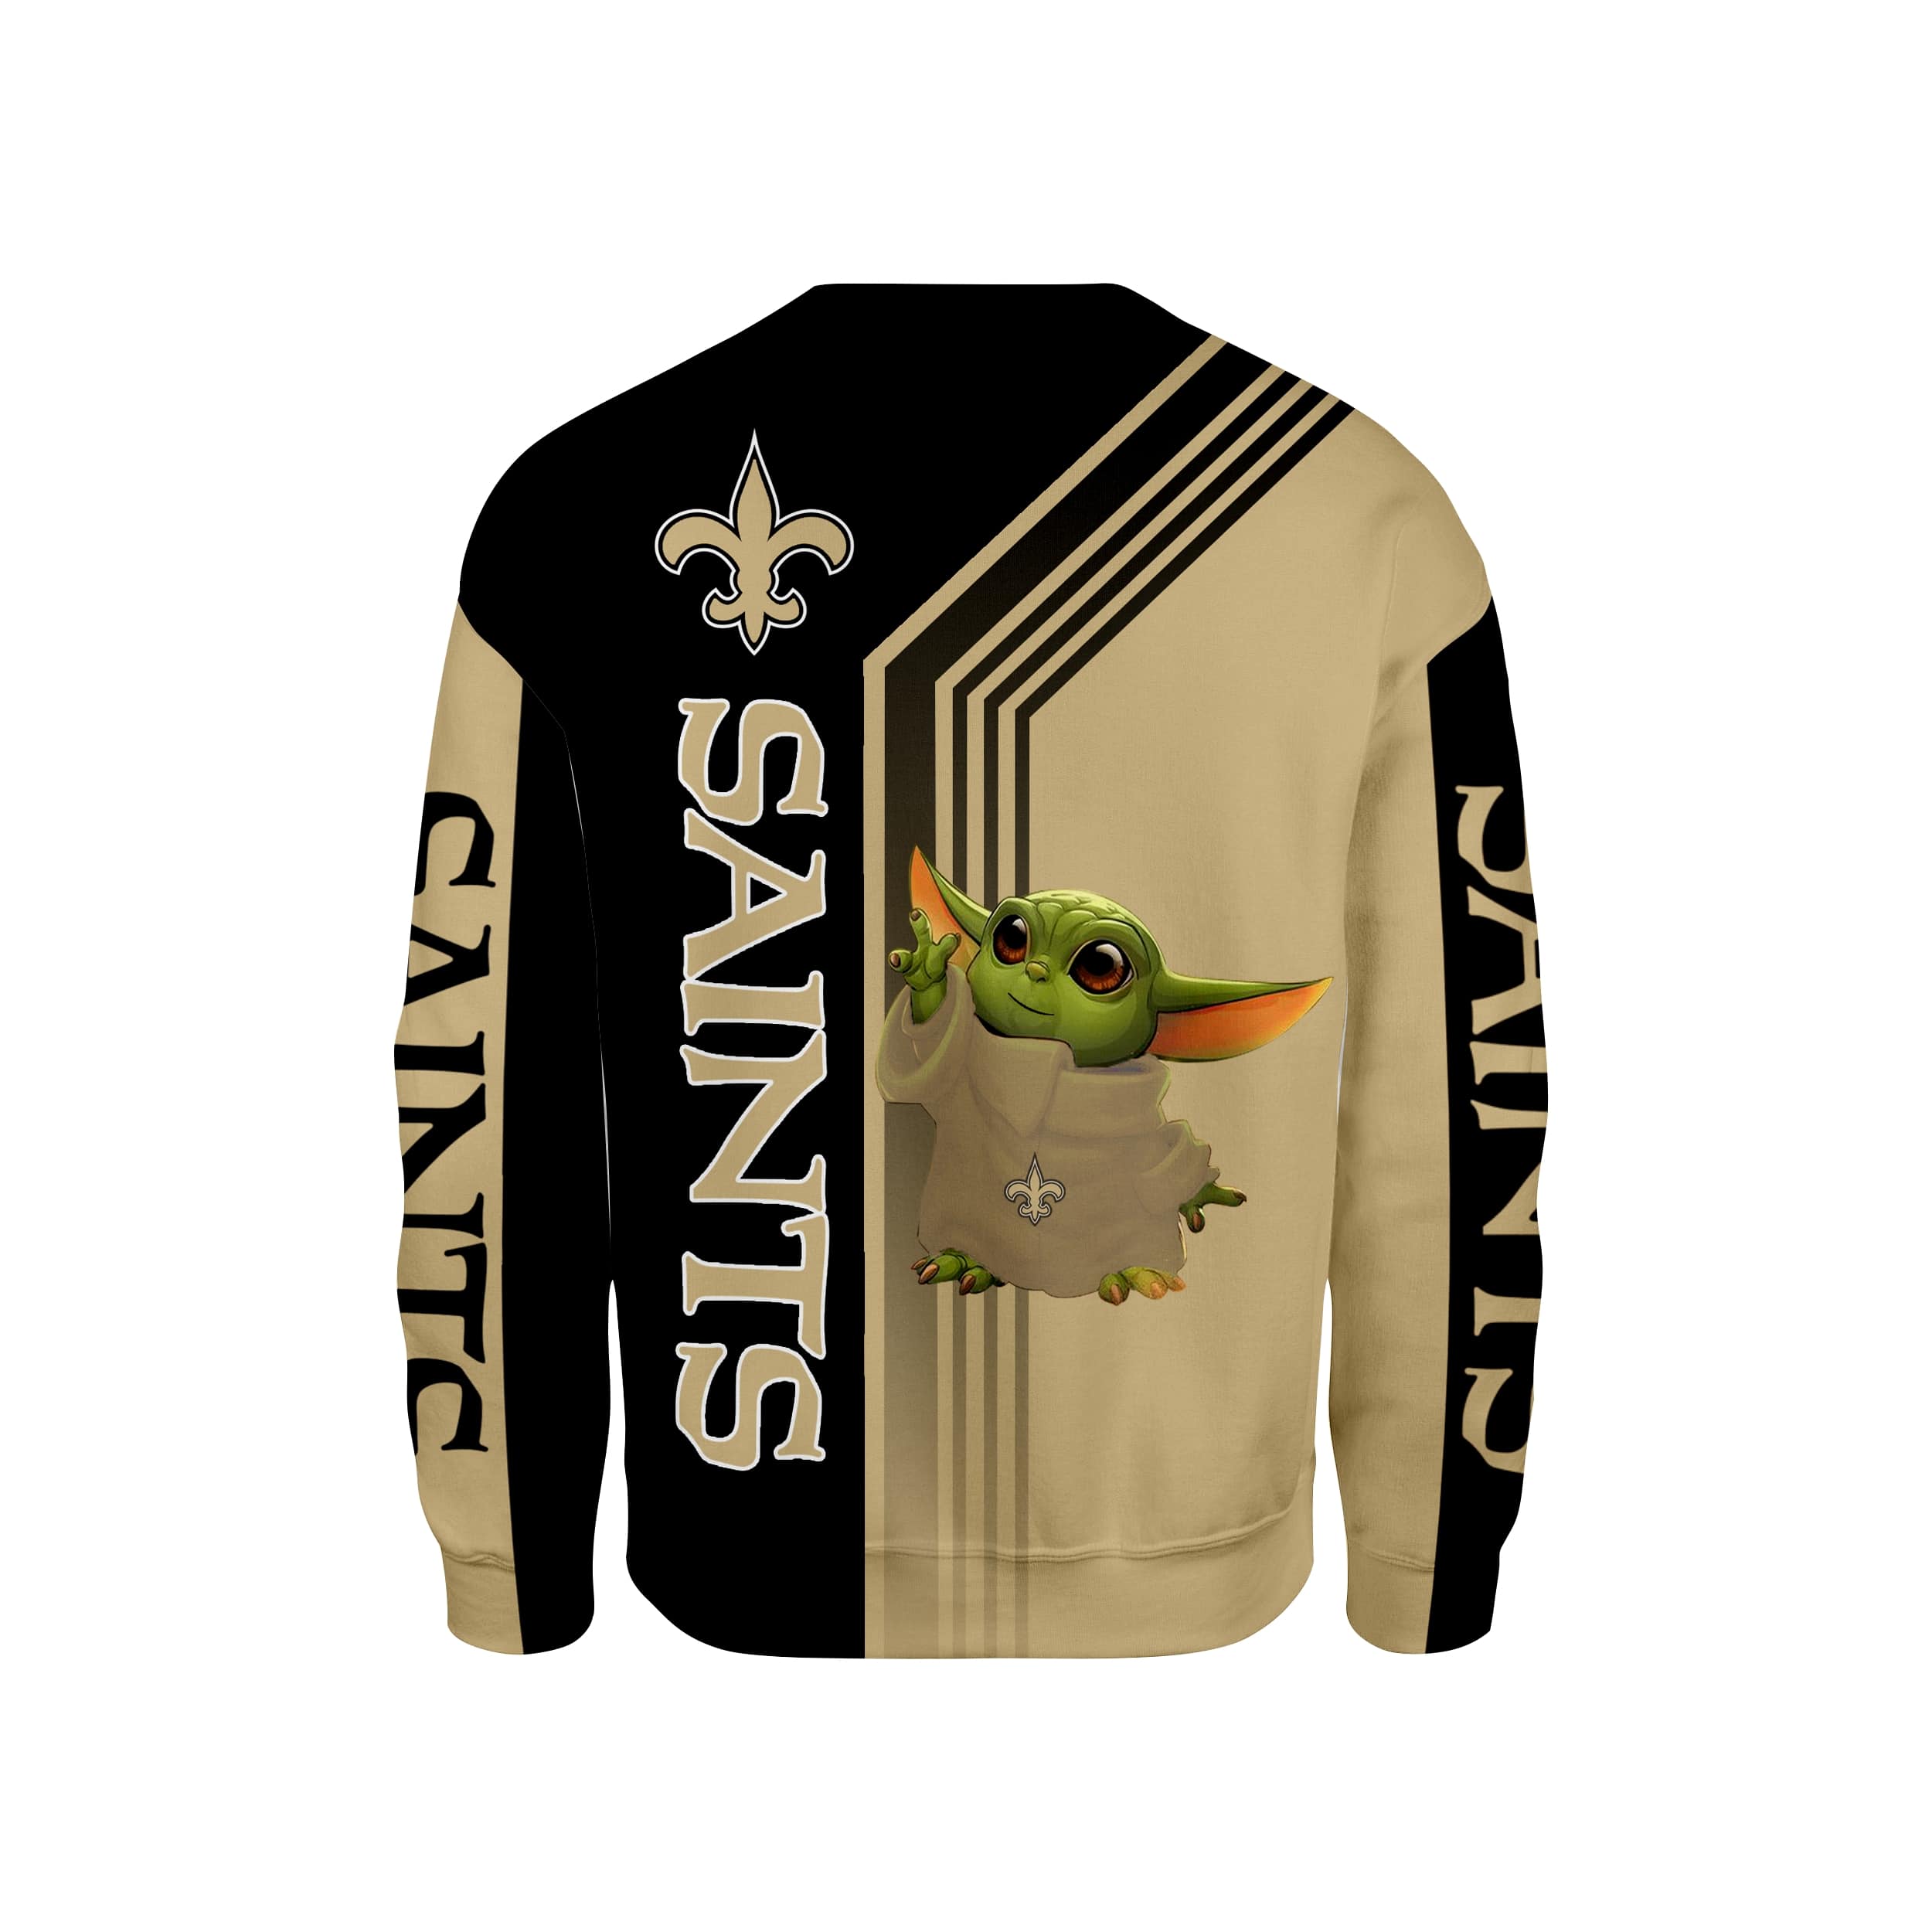 New orleans saints baby yoda full printing sweatshirt - back